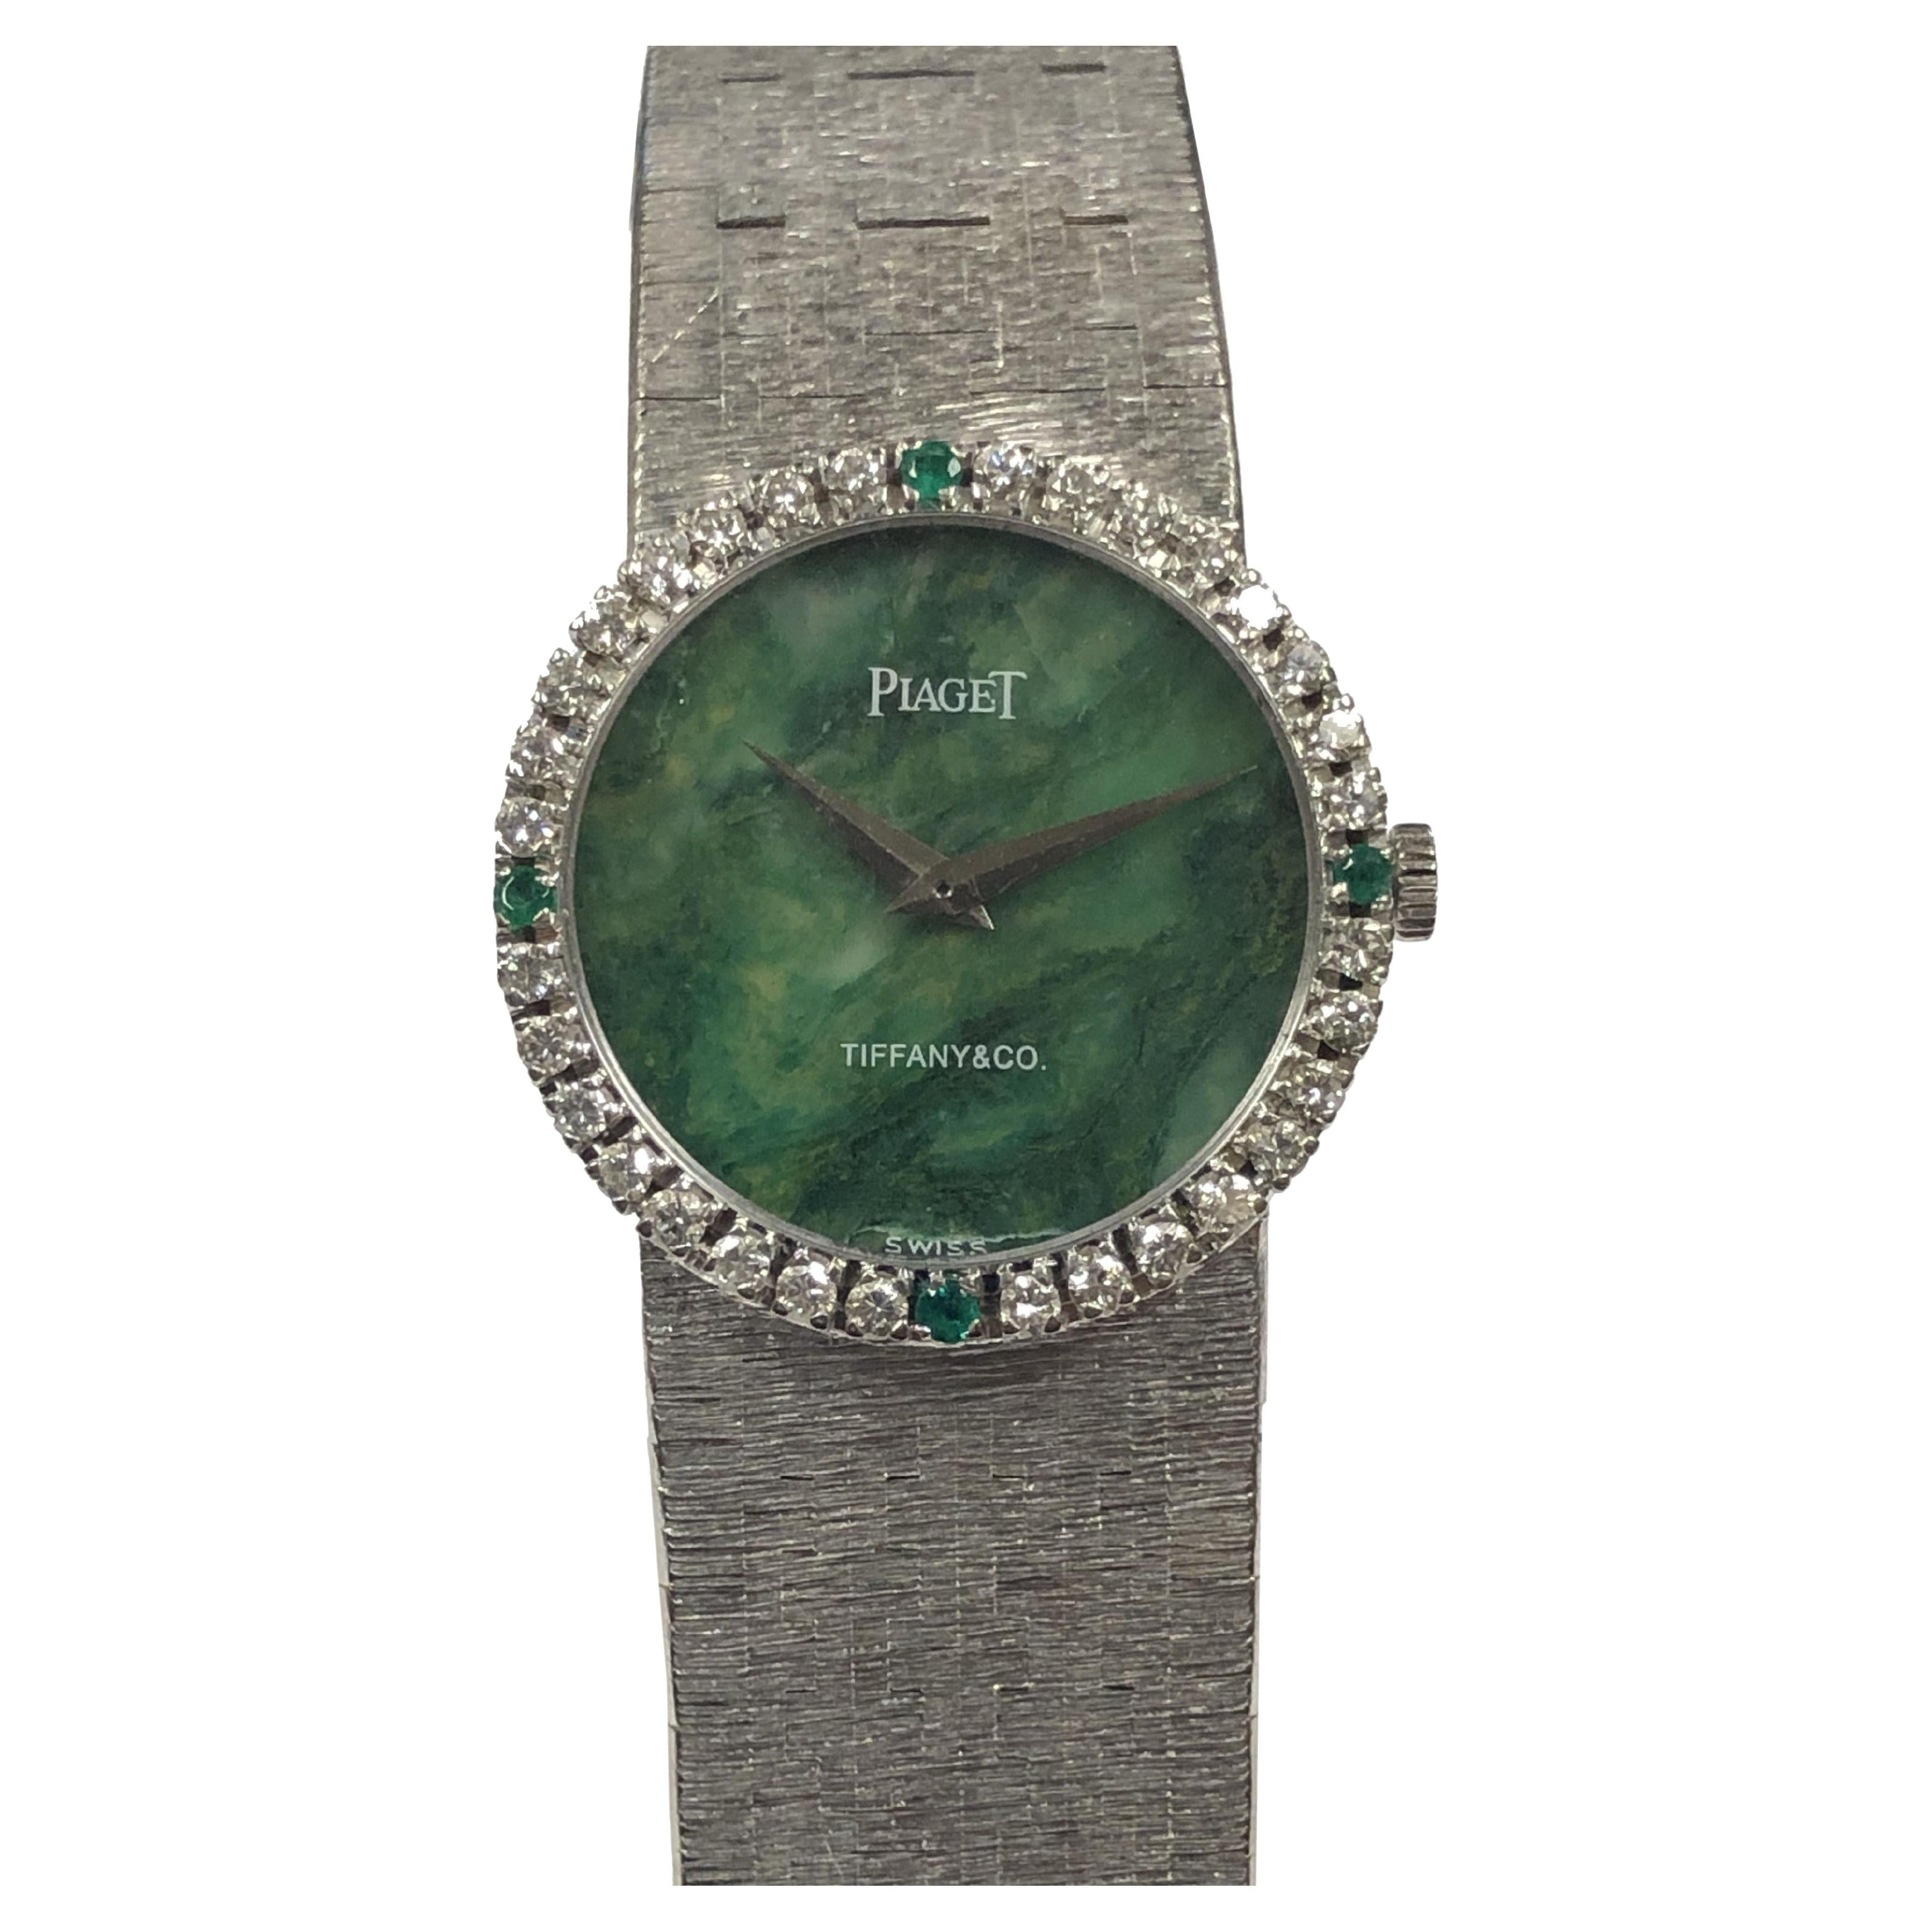 Piaget Tiffany & Co. White Gold Diamond Jadeit and Emerald Ladies Bracelet Watch